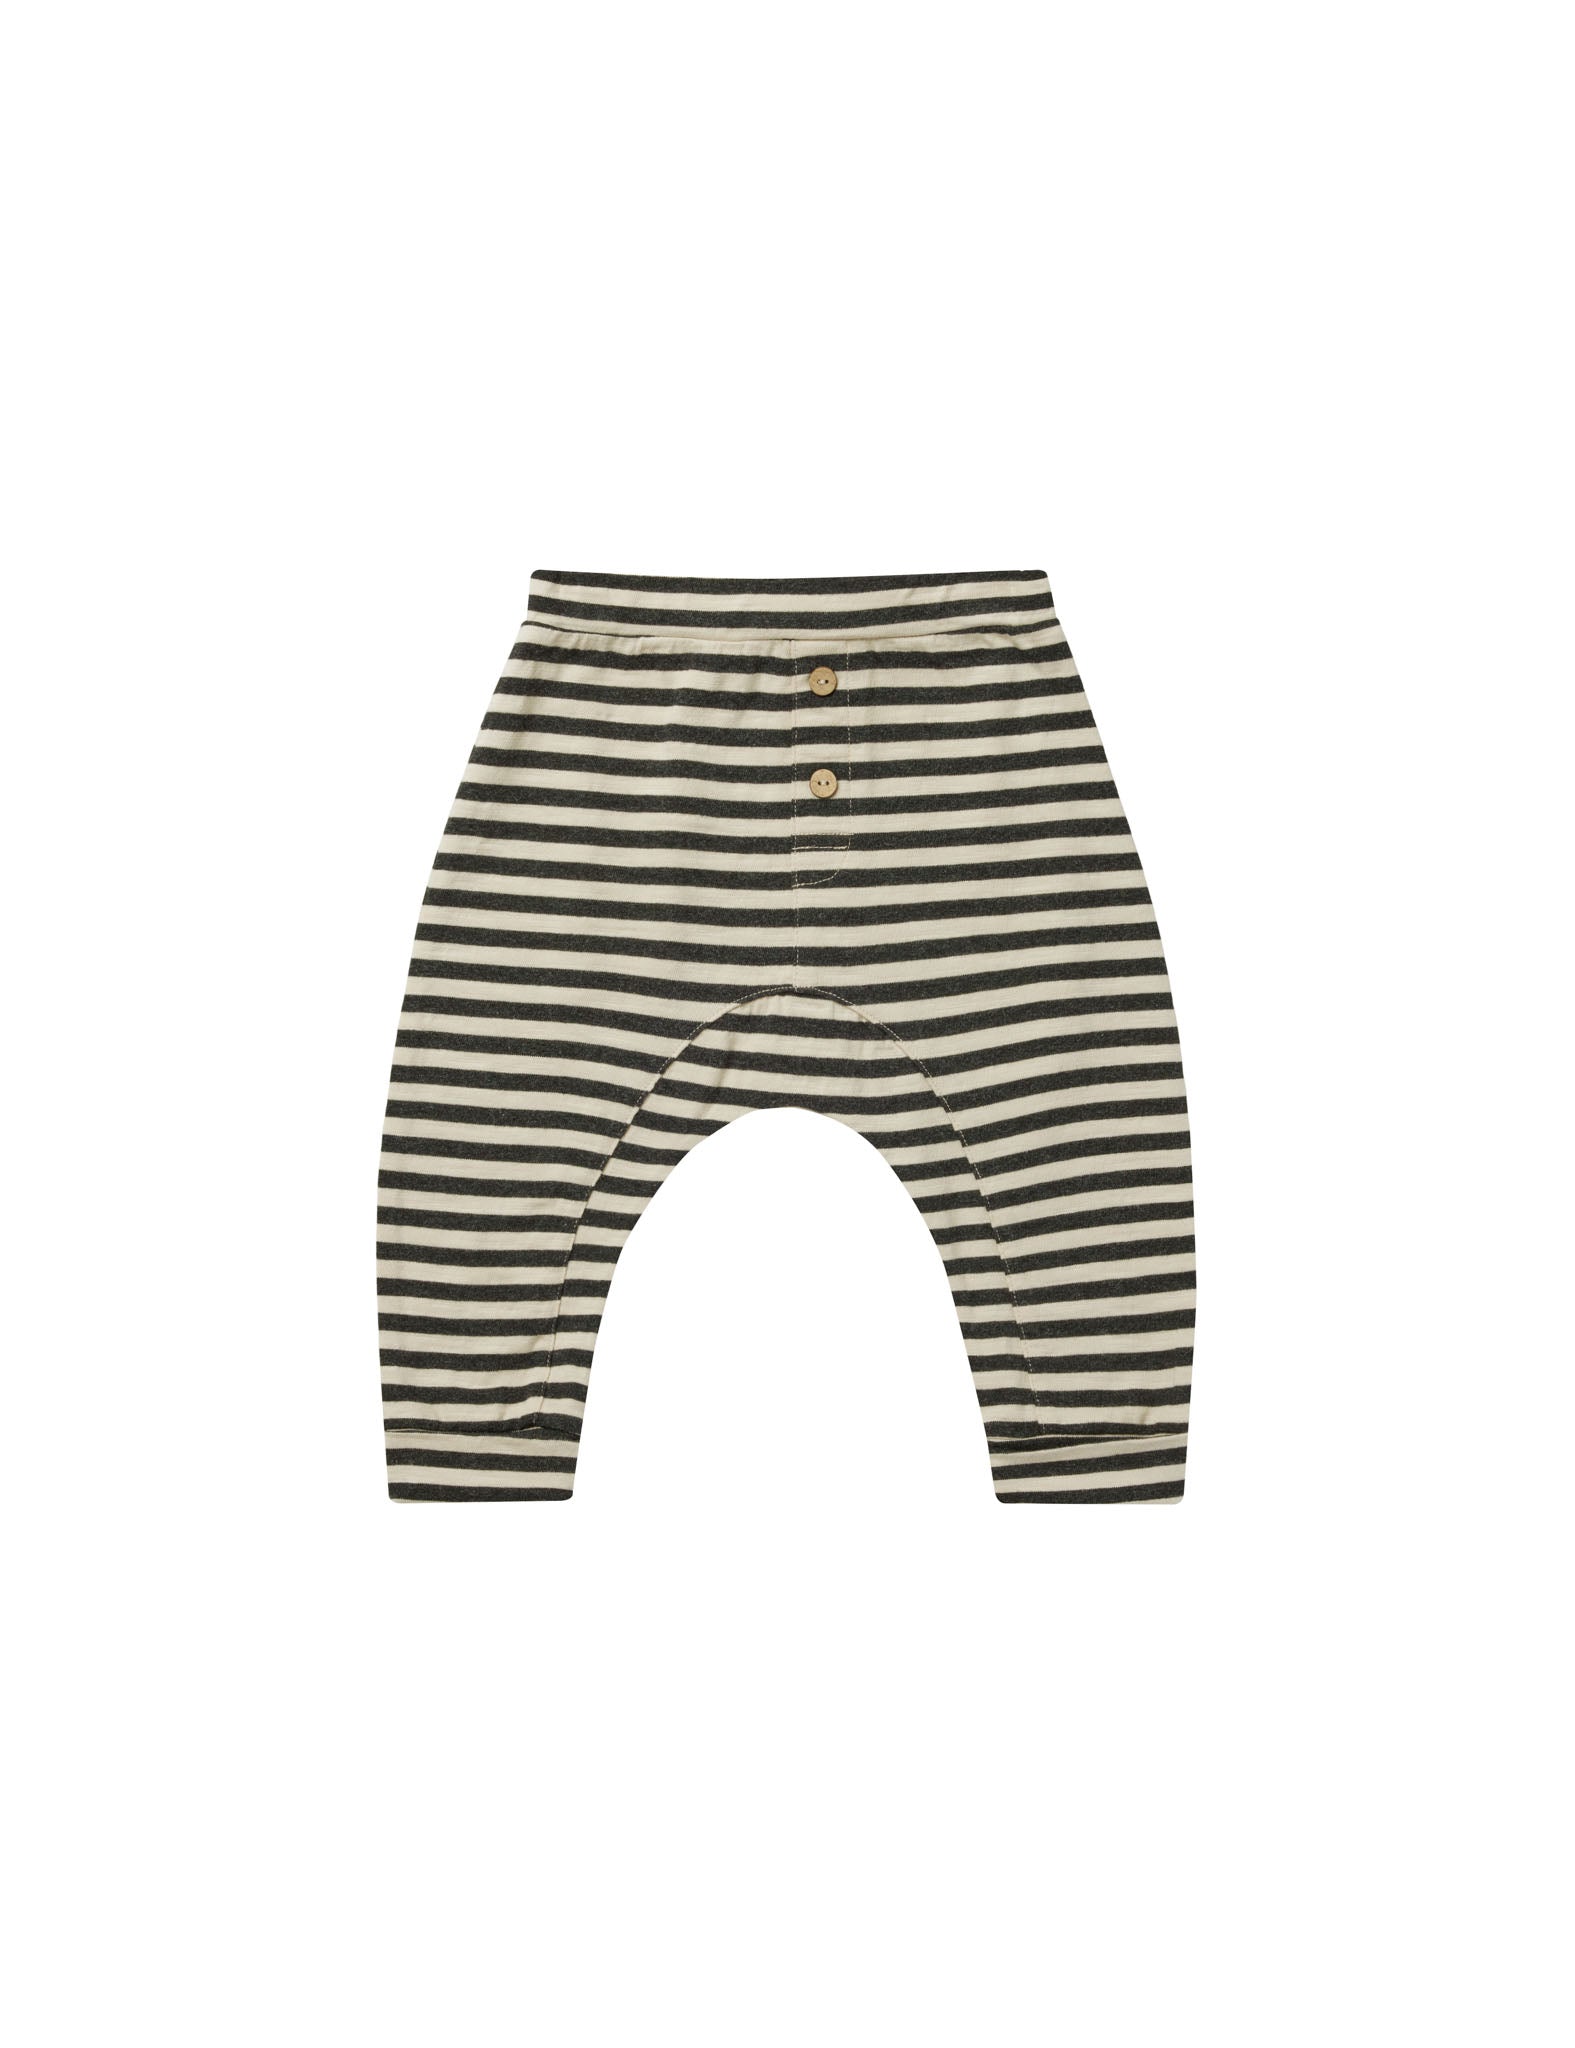 Baby Cru Pant | Black Stripe